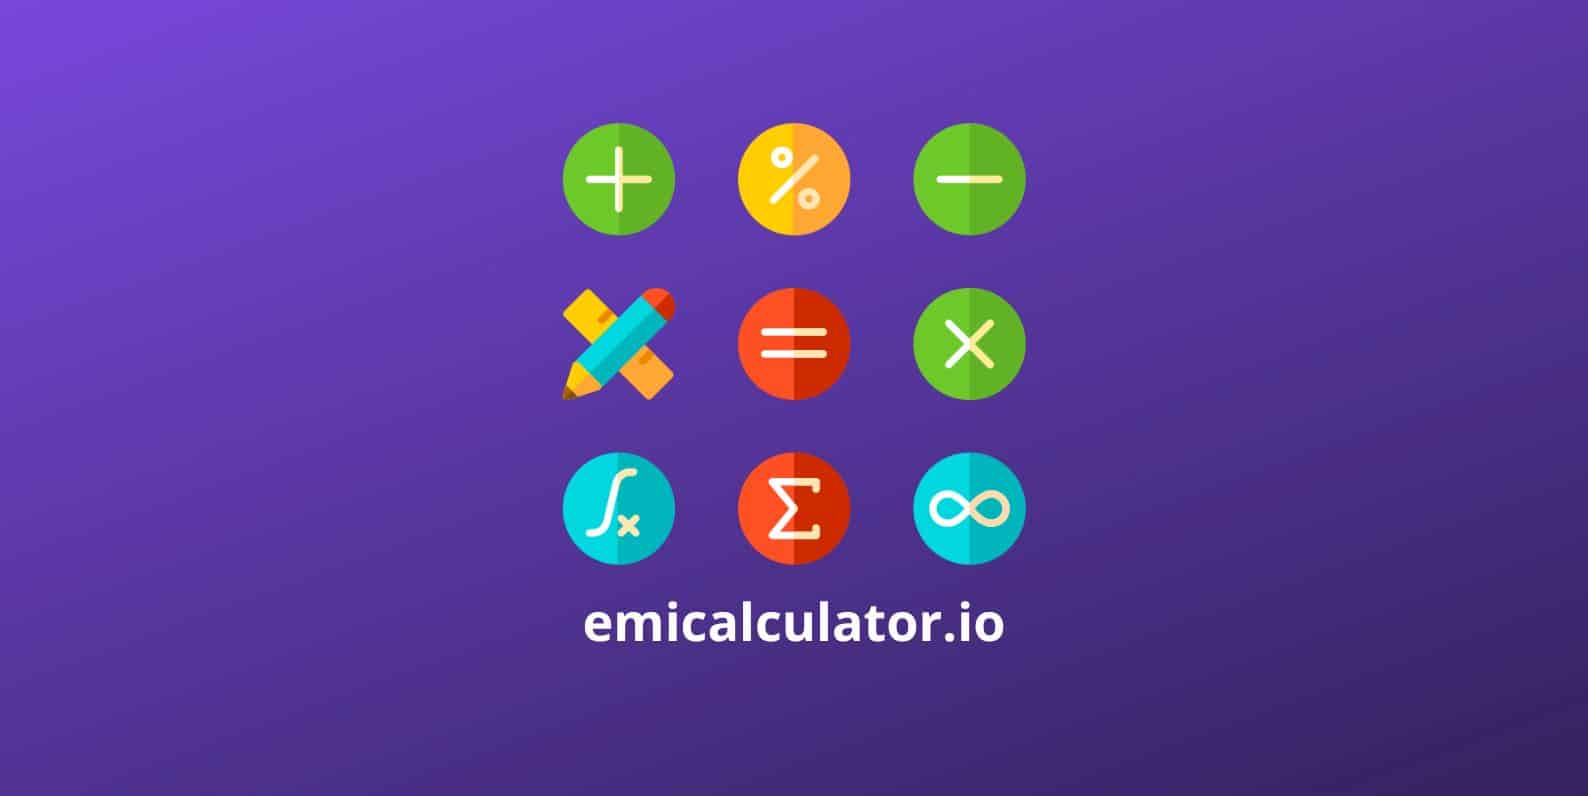 Online EMI Calculator to calculate Loan EMIs for free